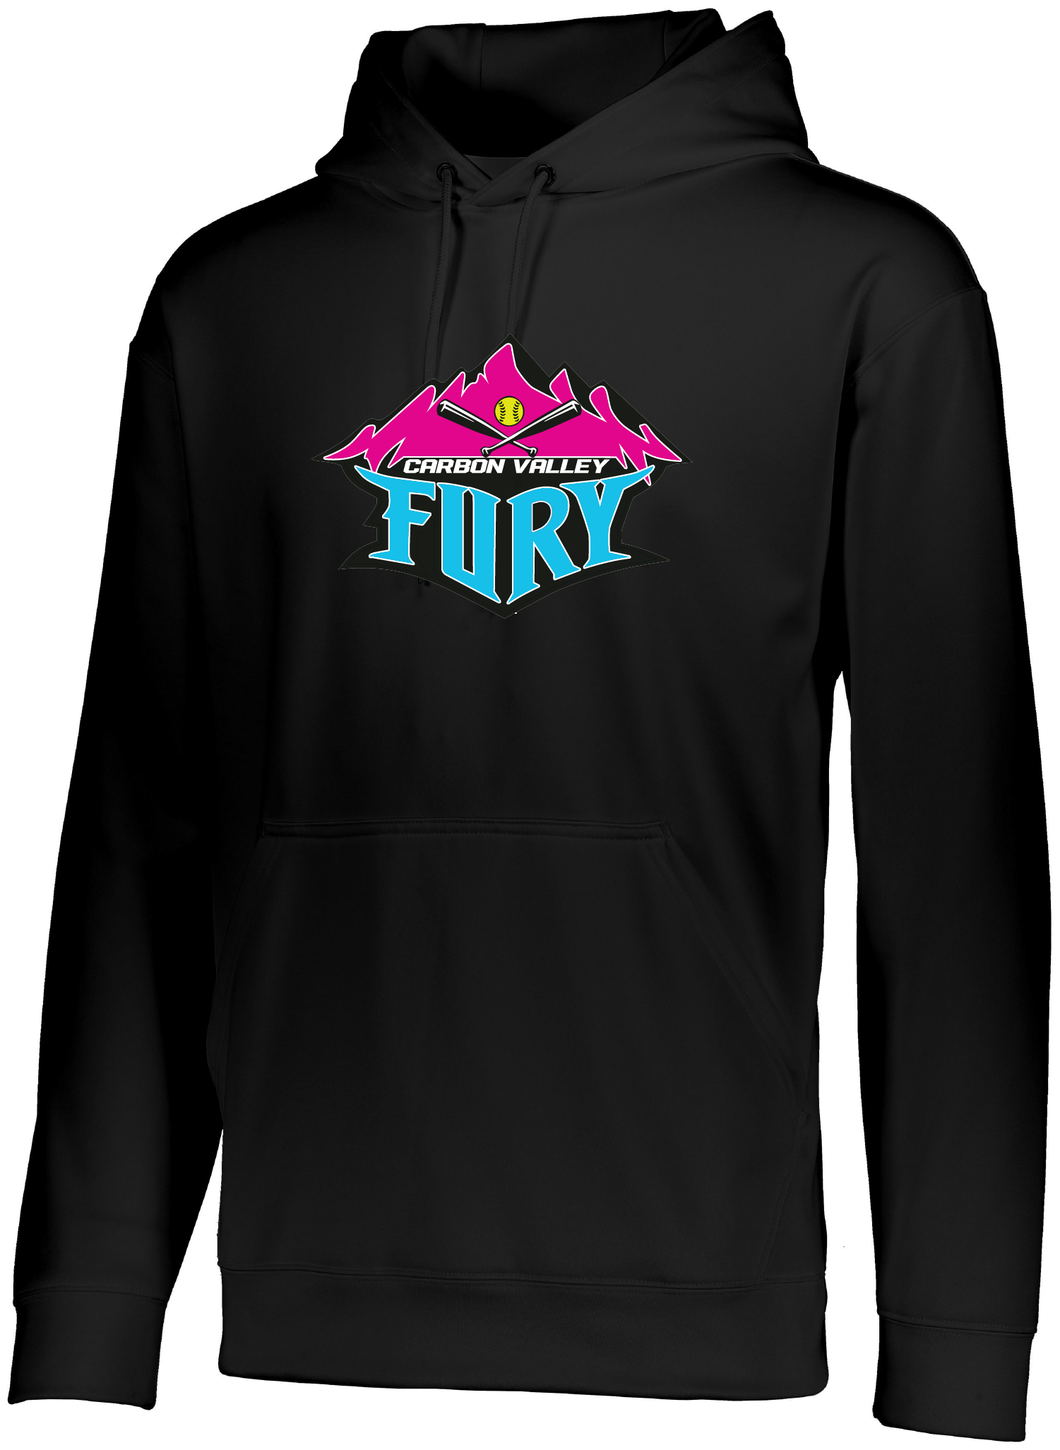 Personalized Fury Adult Hooded Sweatshirt